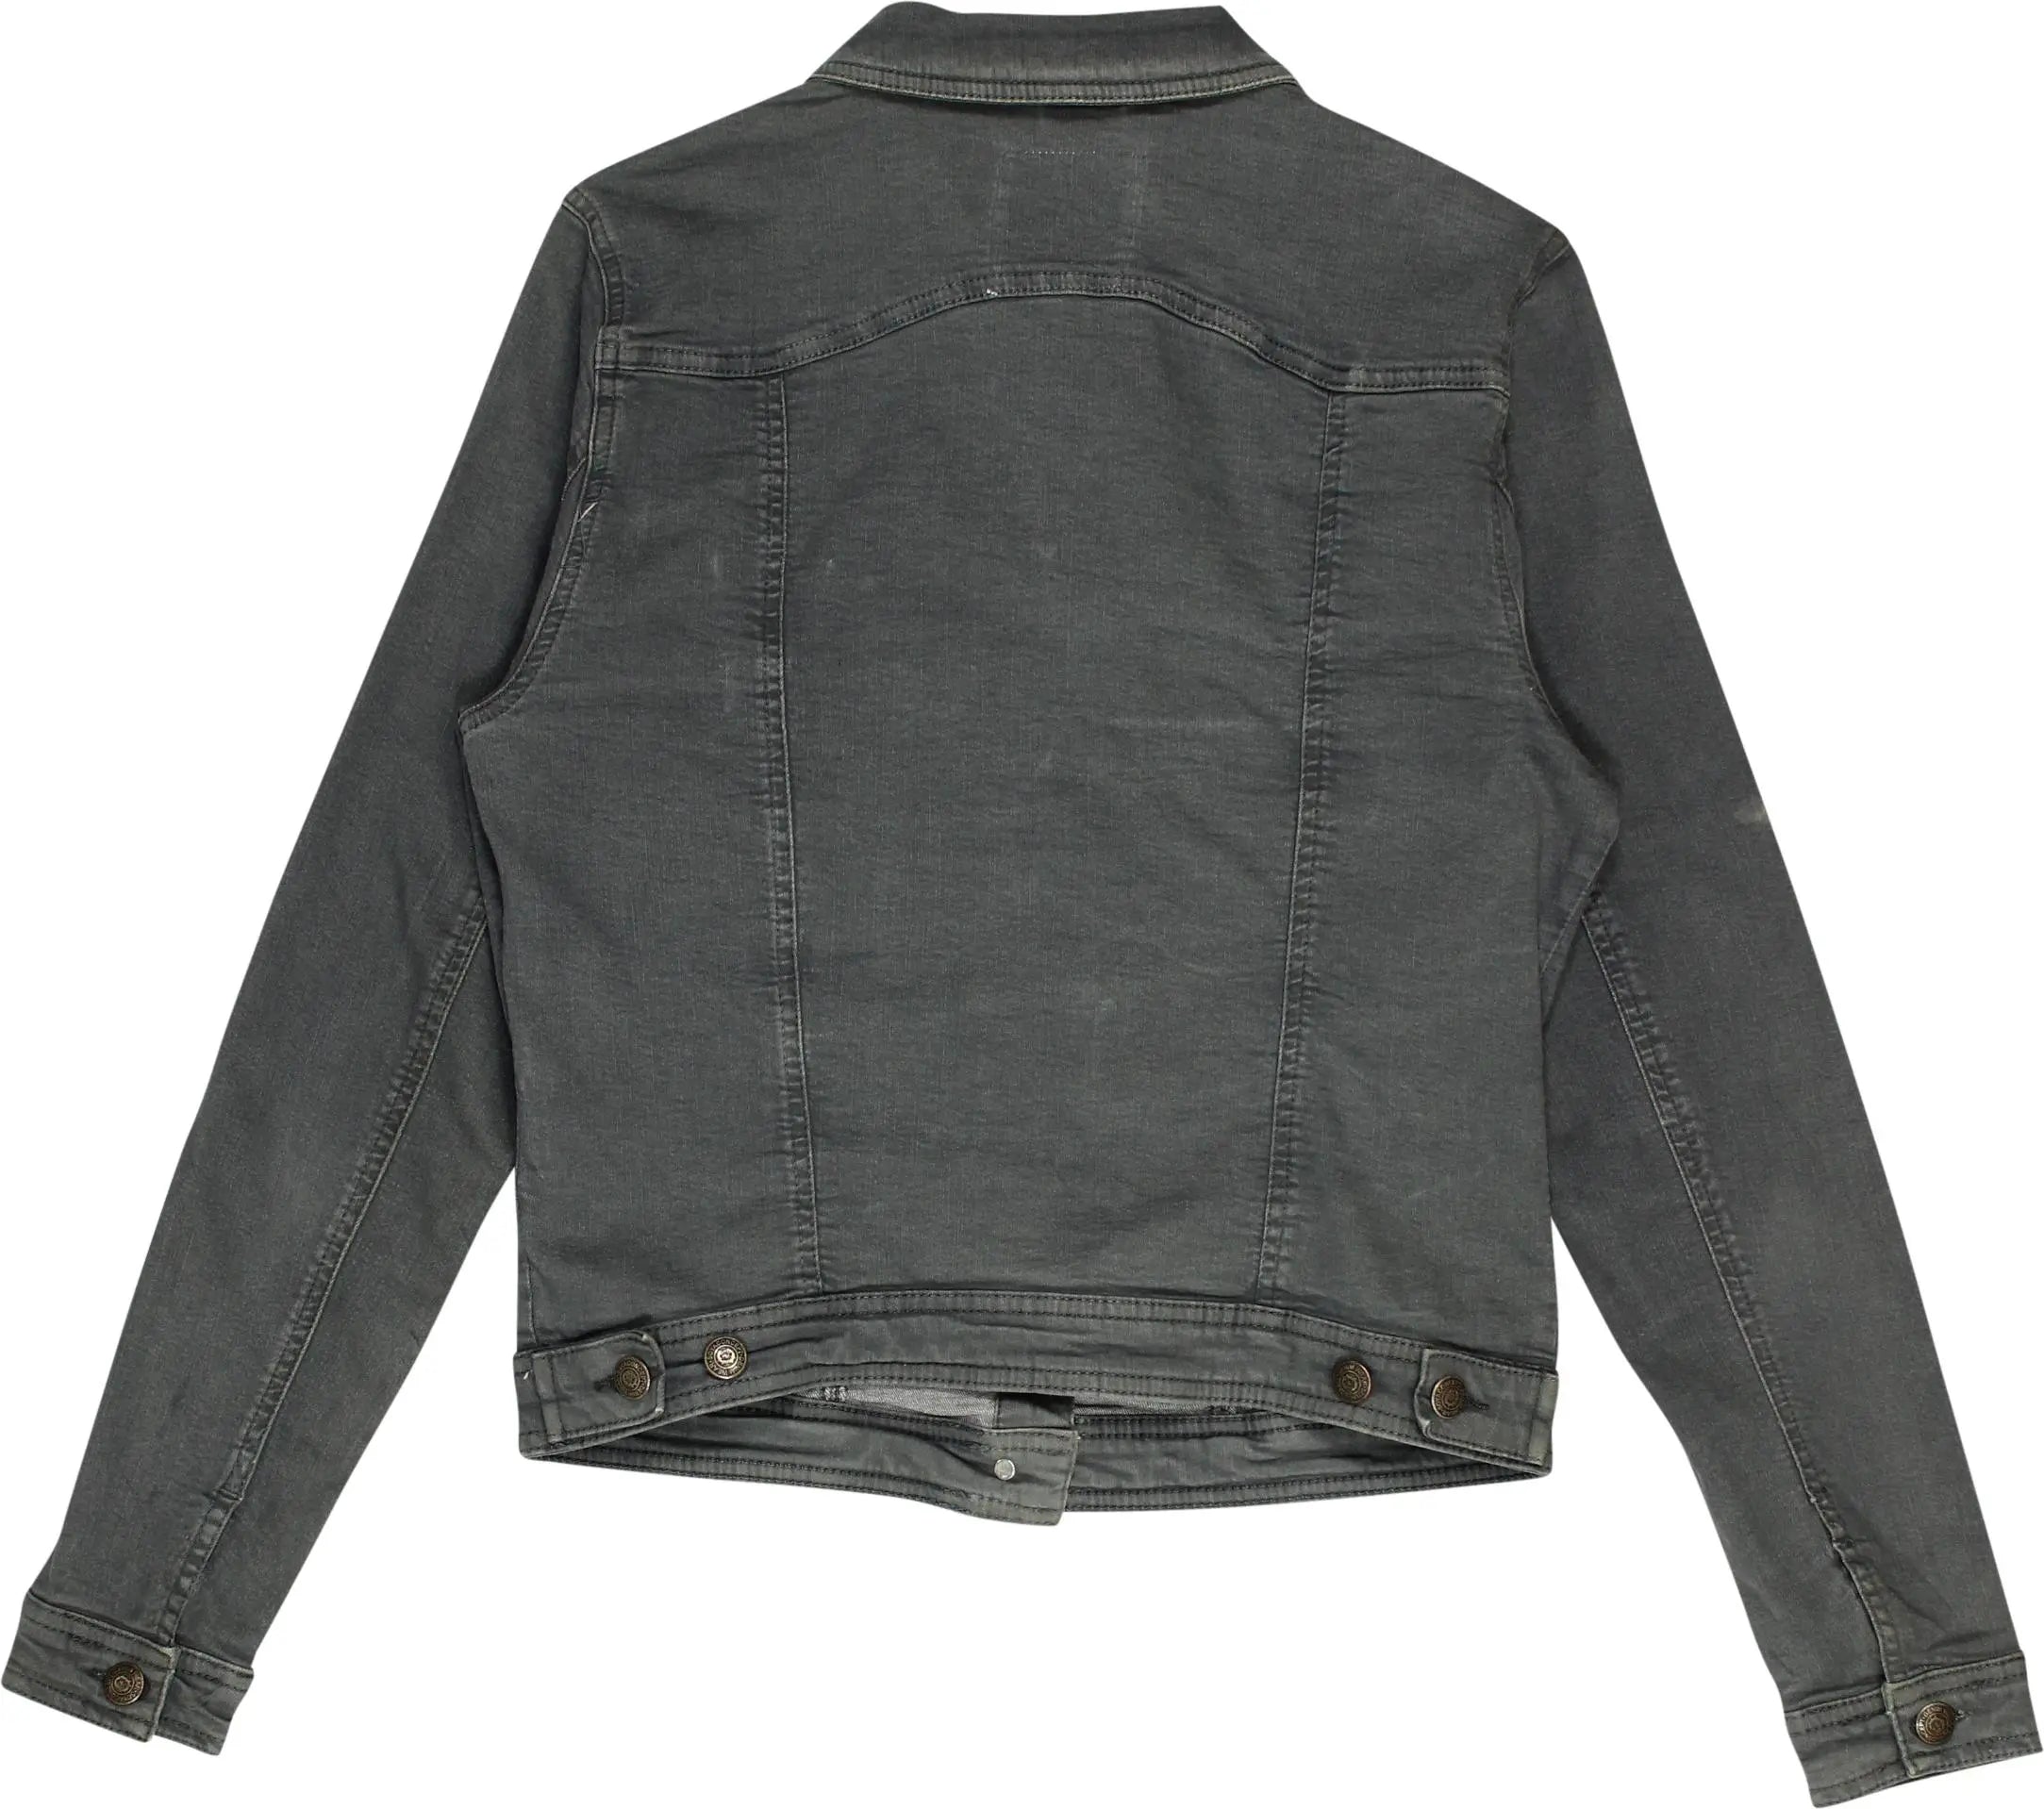 Soyaconcept - Denim Jacket- ThriftTale.com - Vintage and second handclothing